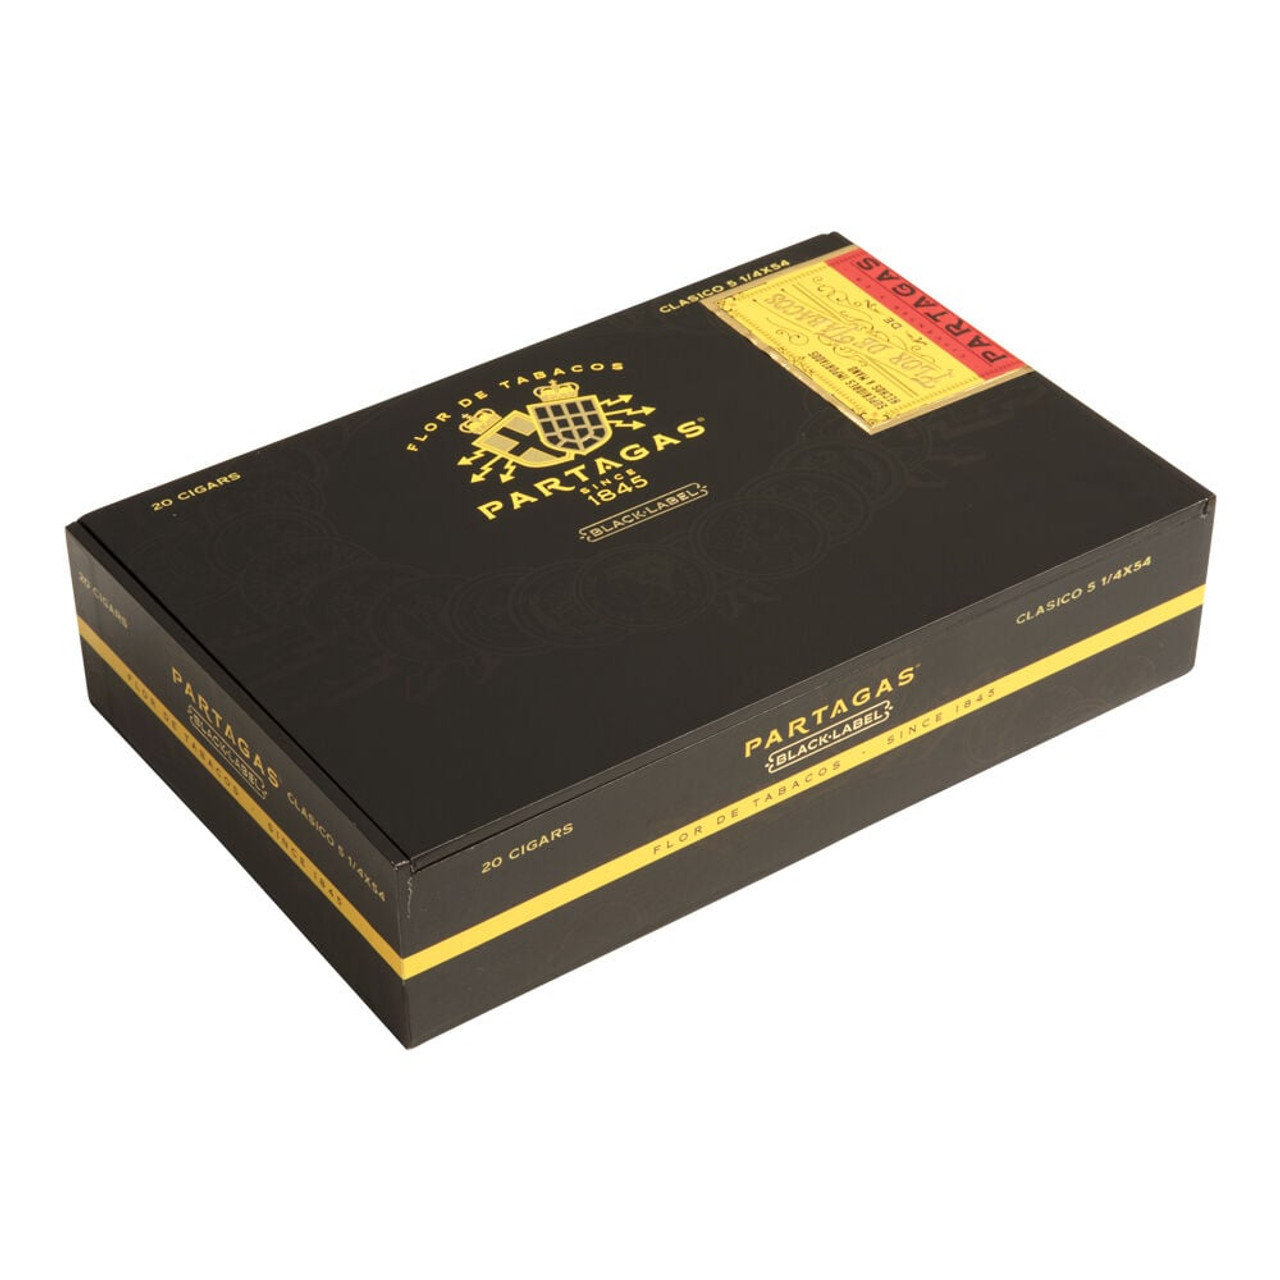 Partagas Black Label Clasico Cigars - 5.25 x 54 (Box of 20) *Box